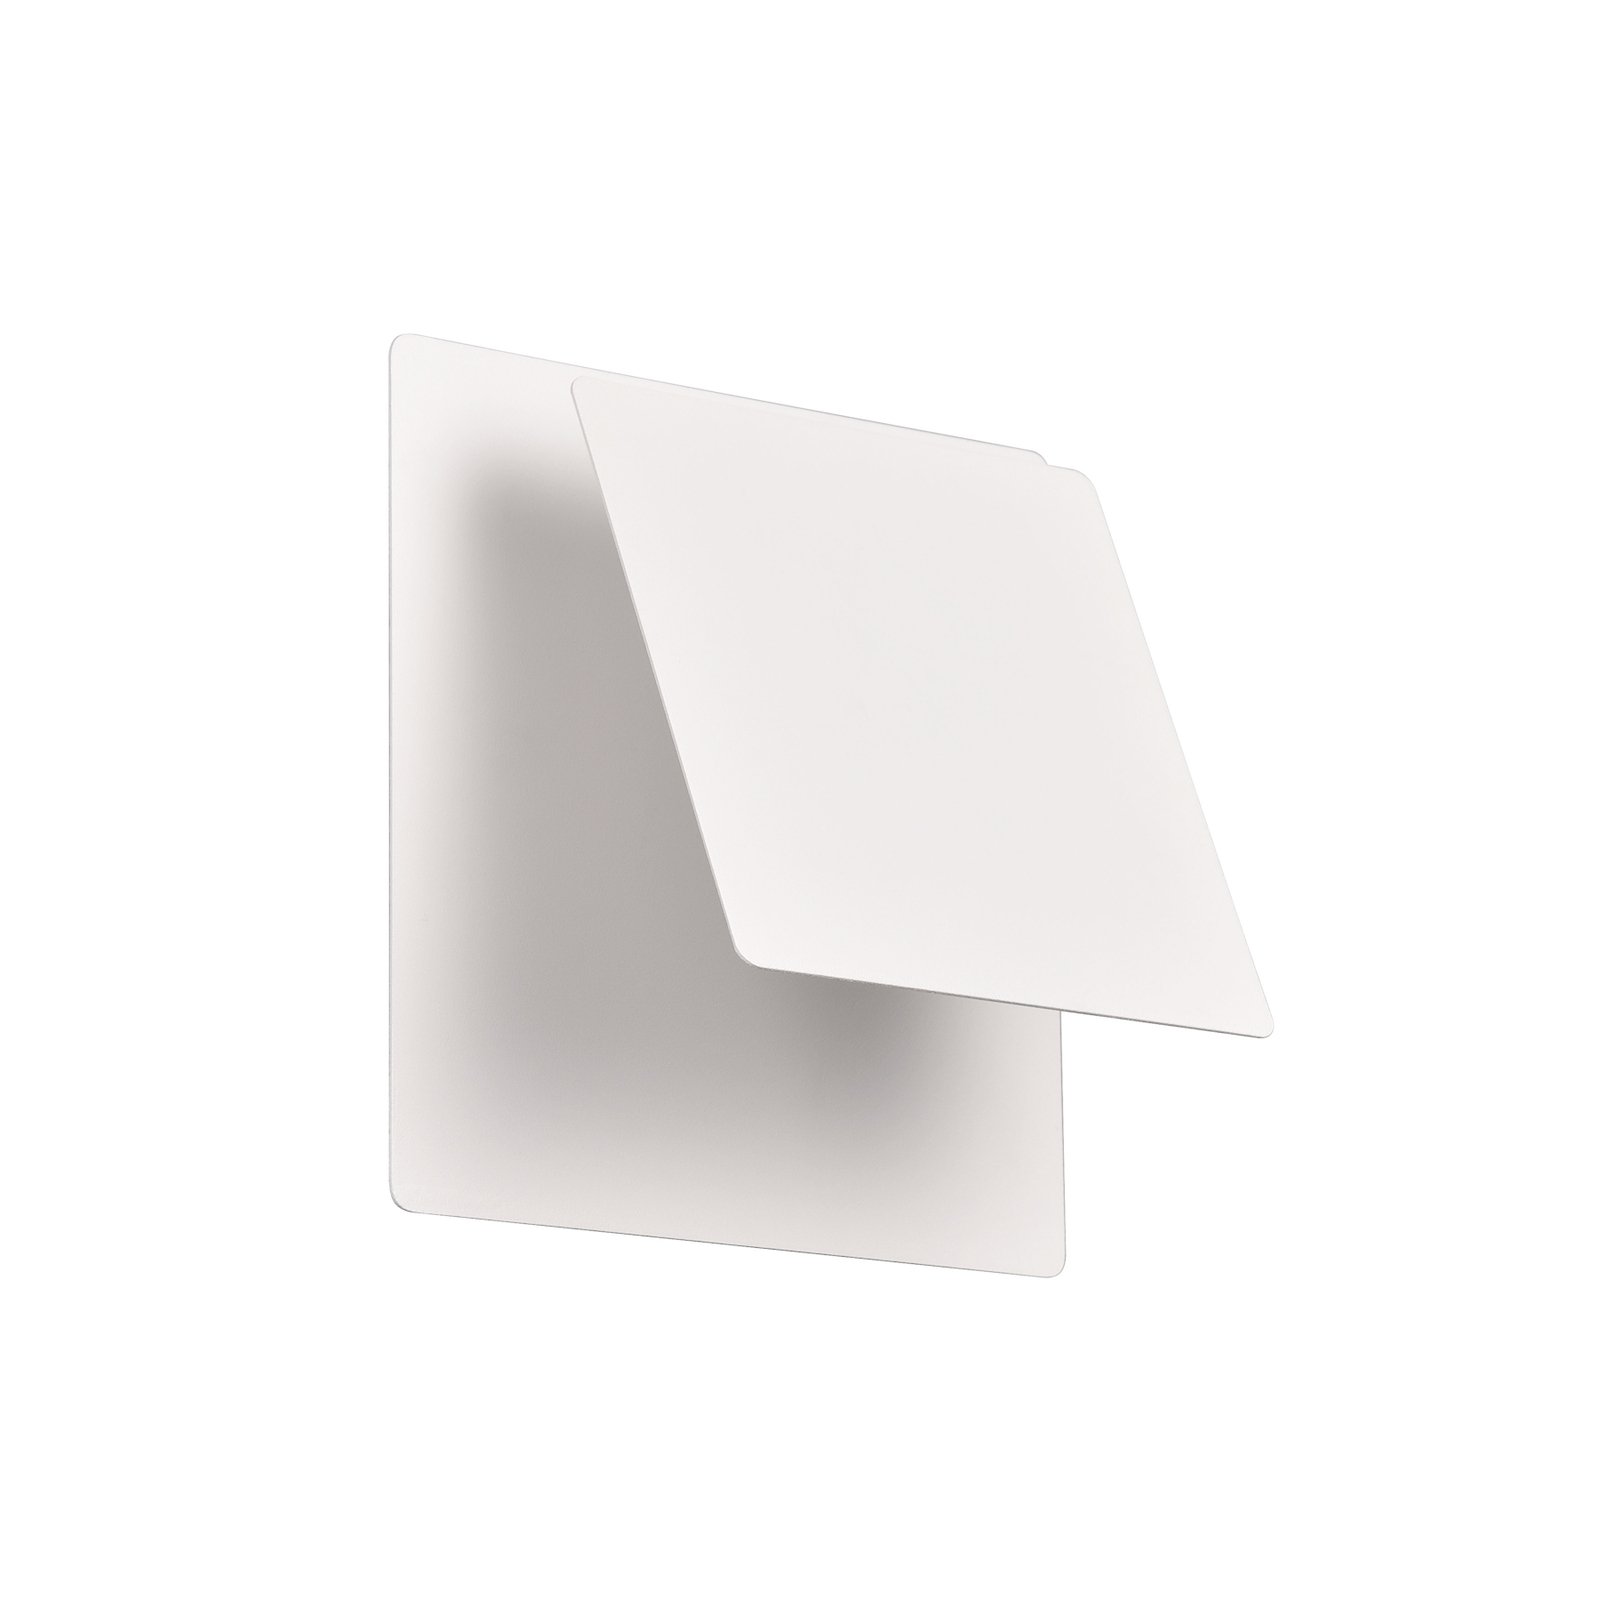 LED wall light Mio, angular lens, matt white, indirect